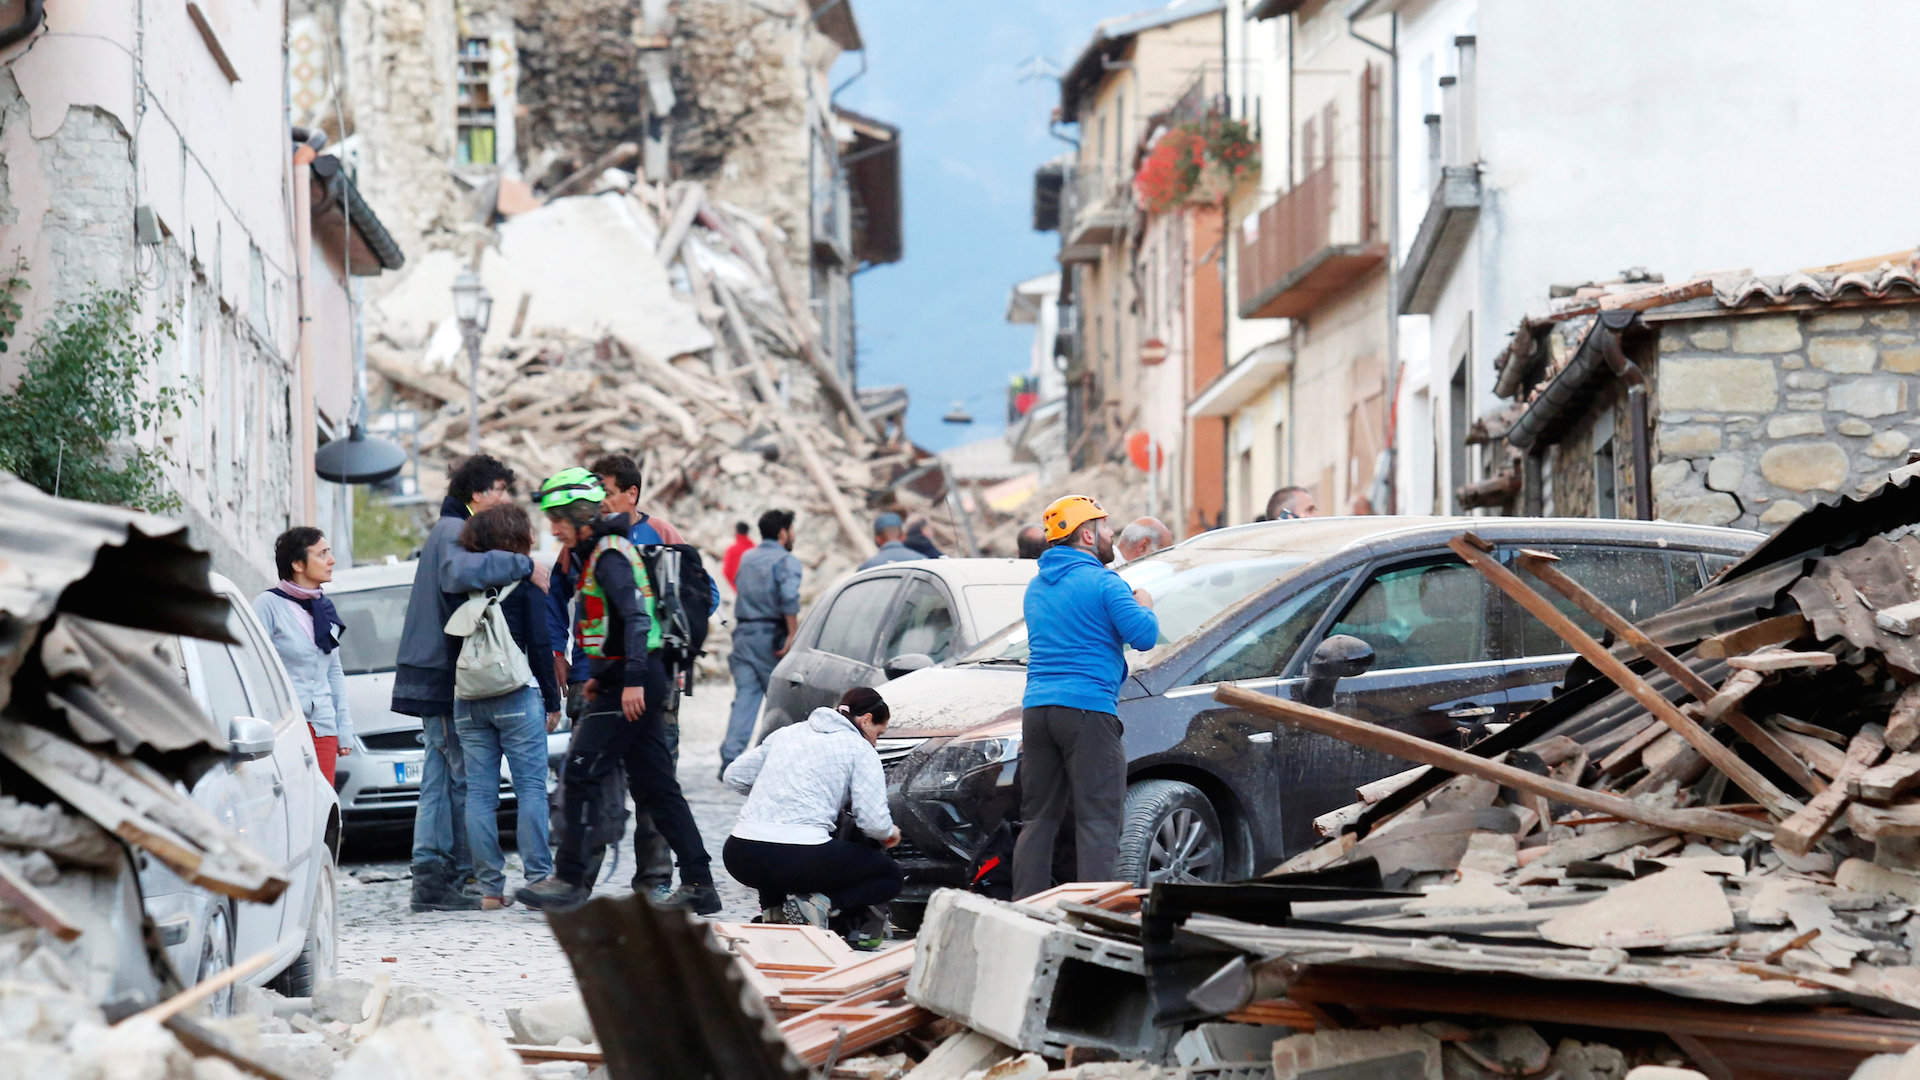 Deadly earthquake rocks central Italy; dozens dead, hundreds missing - The Washington Post